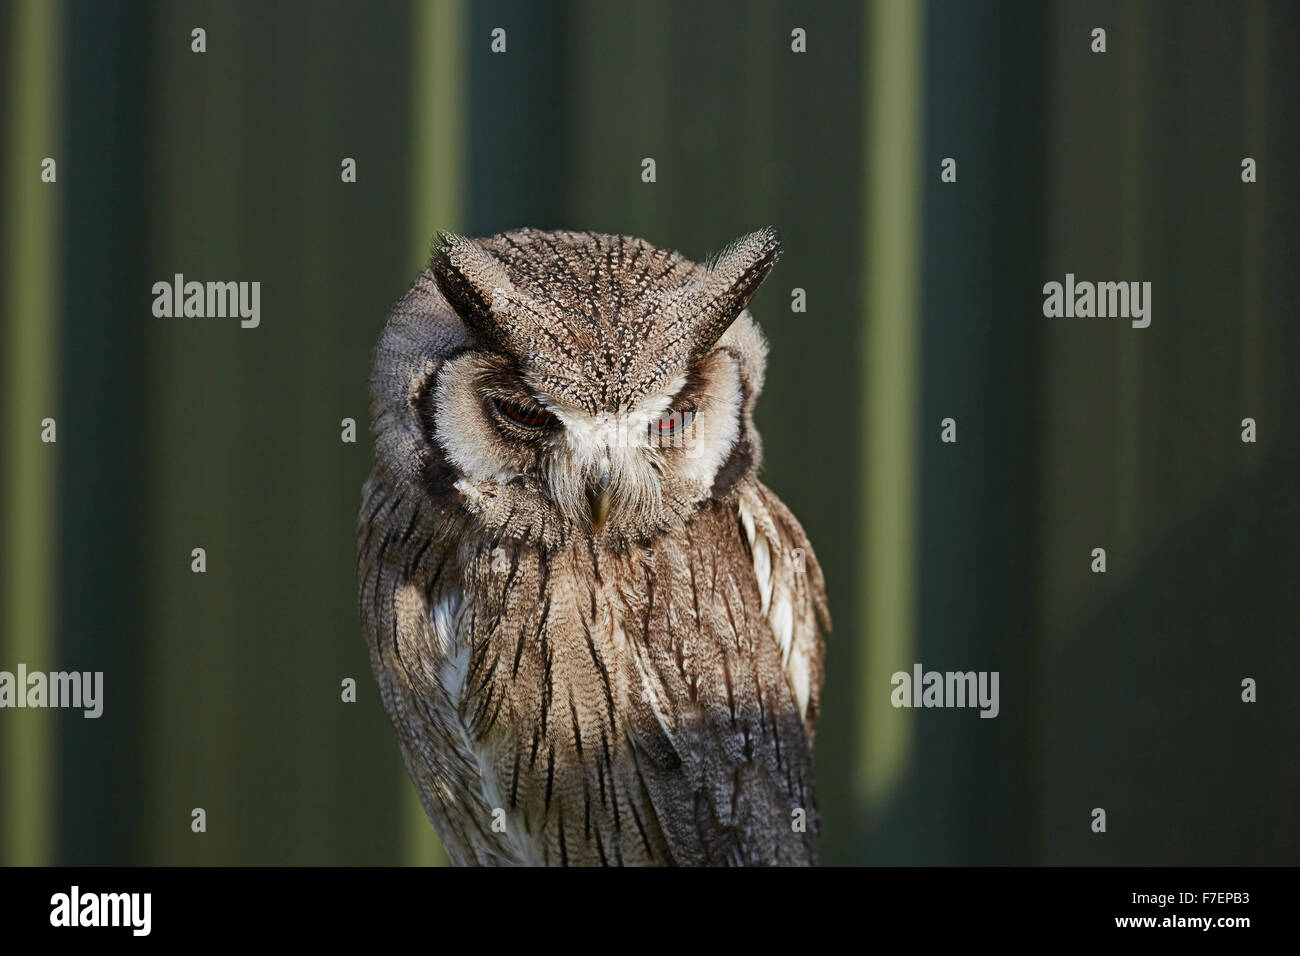 Captive White faced scops owl,Ptilopsis leucotis,with a green background. Stock Photo